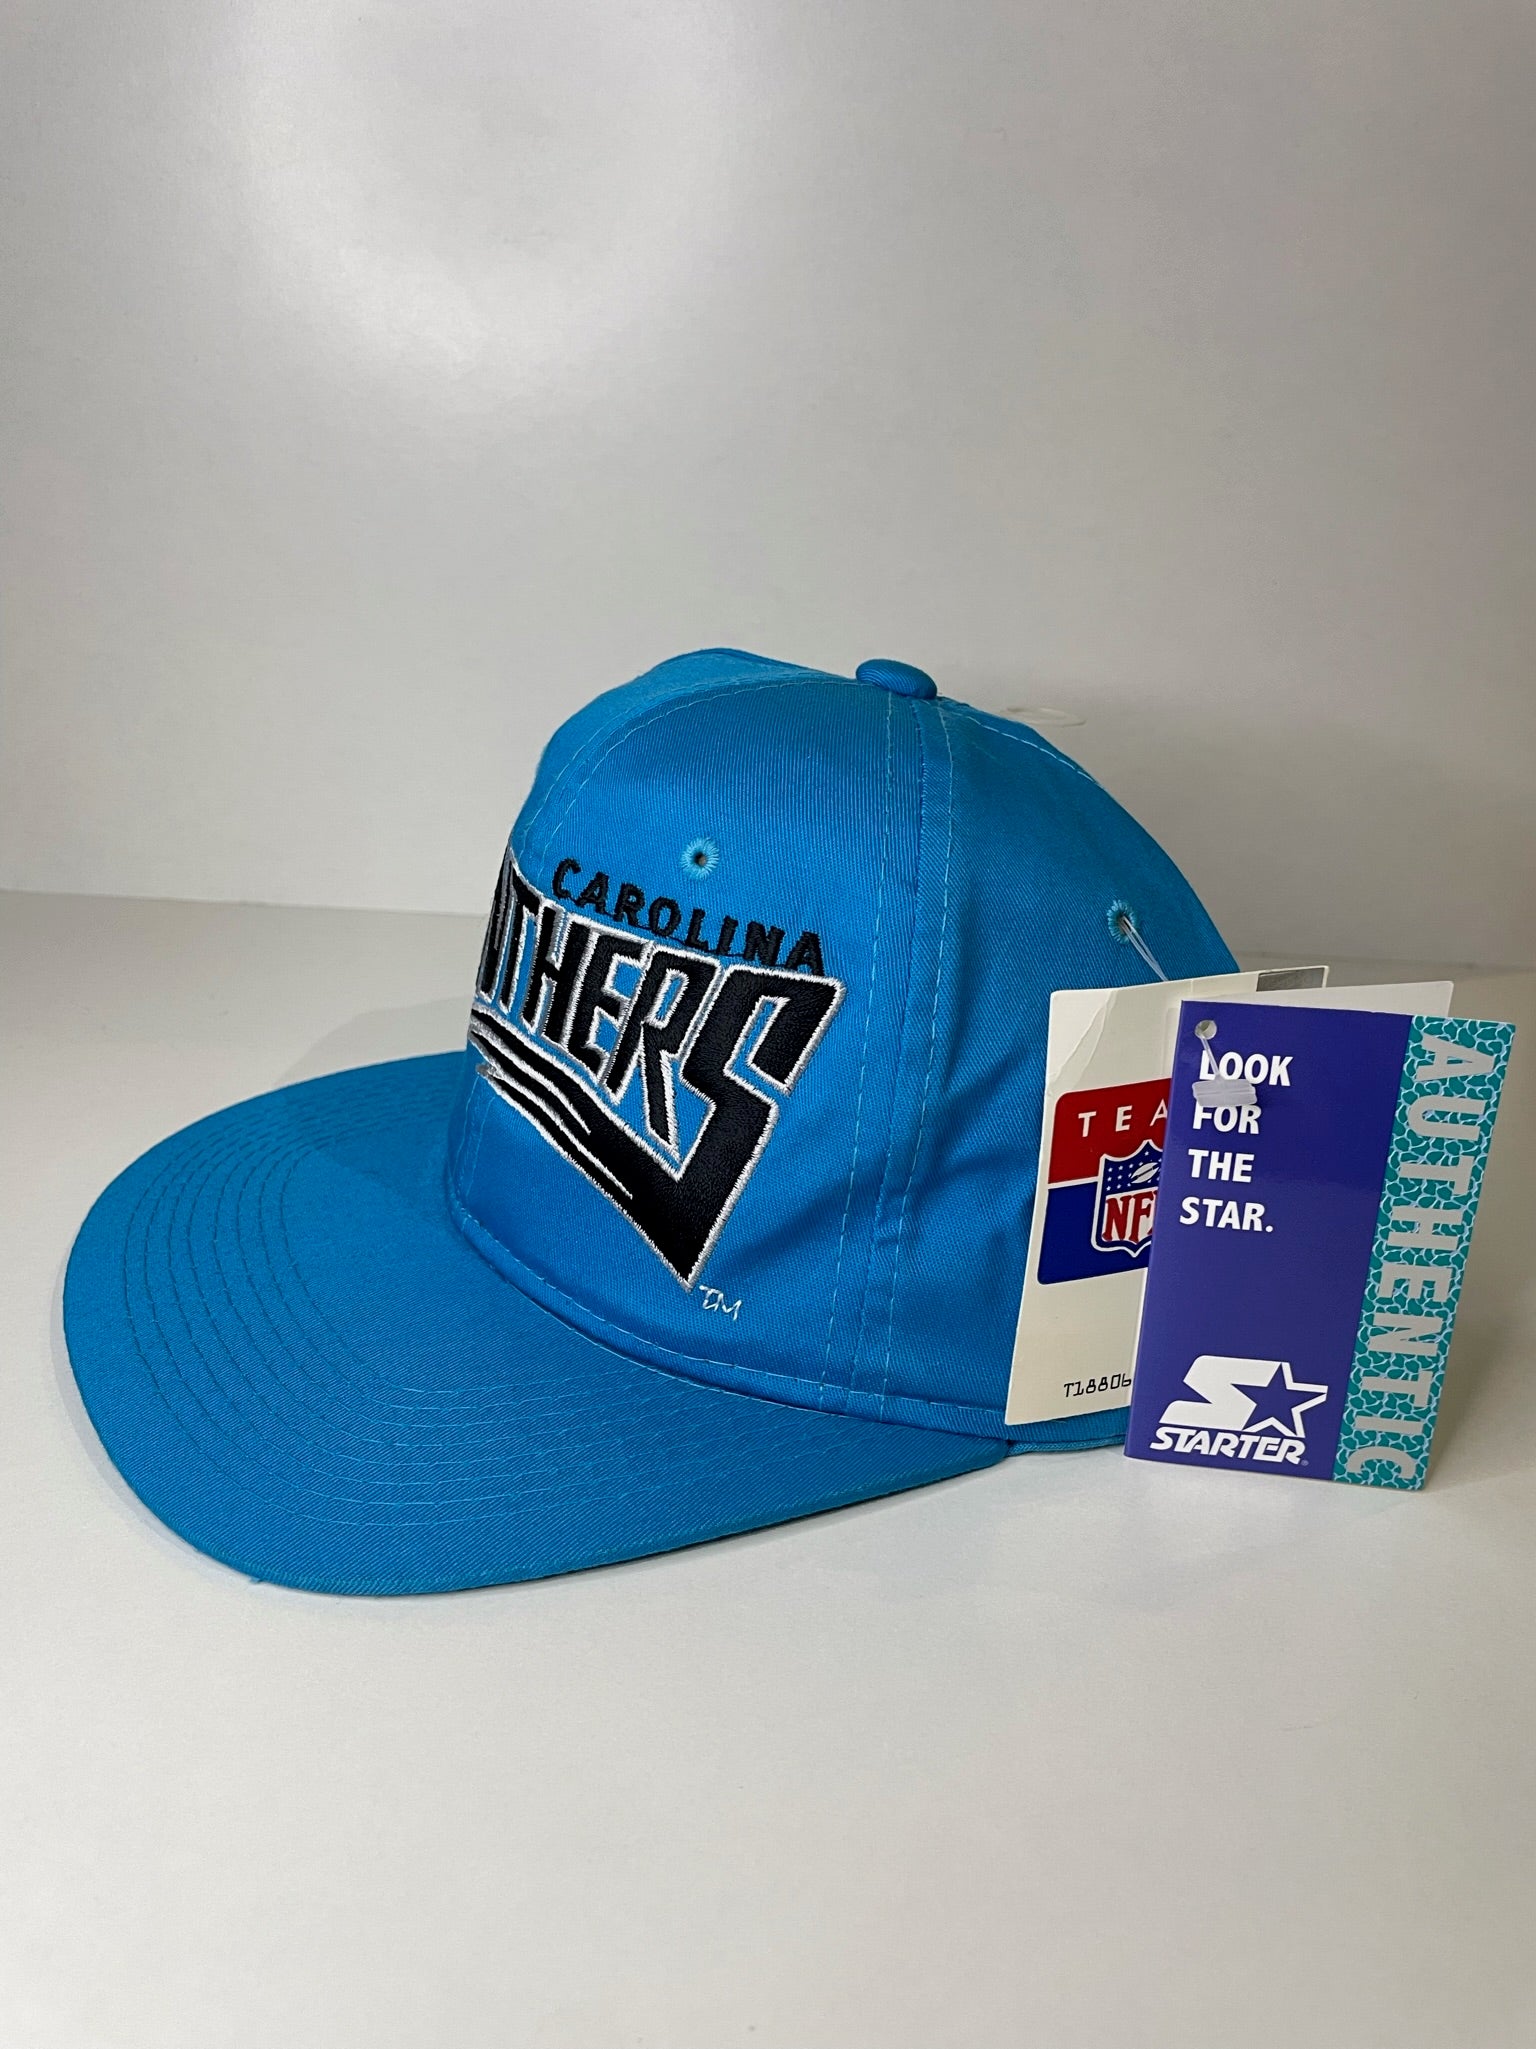 Charlotte Hornets Vintage 90s Starter Snapback Hat- One Size Fits All